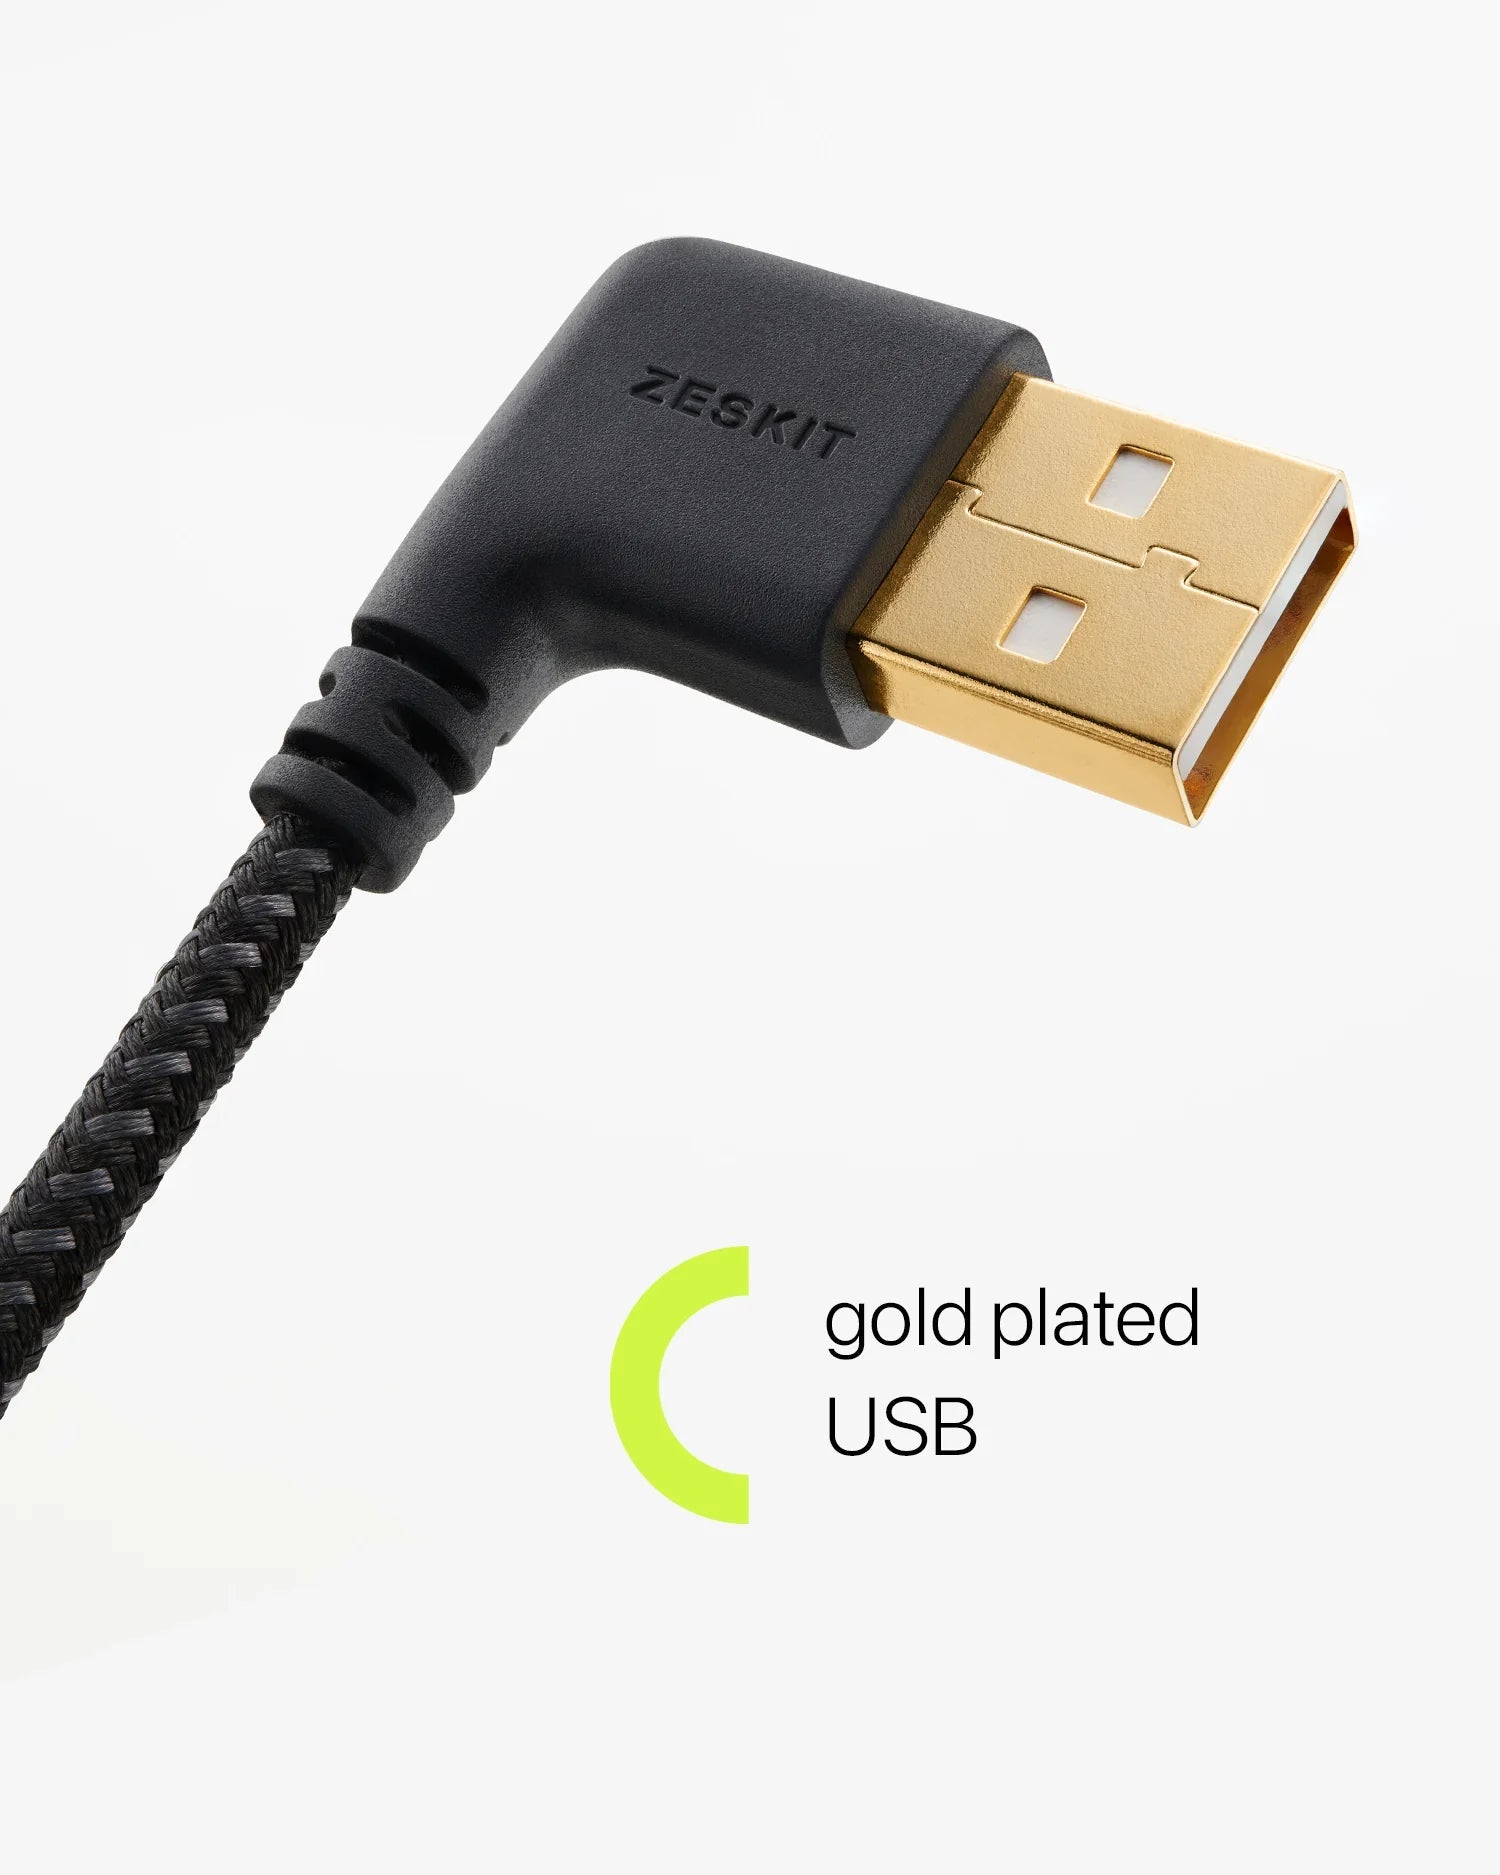 Zeskit Lightning to USB - A MFi 認證 90度傳輸線 - Fever Electrics 電器熱網購平台